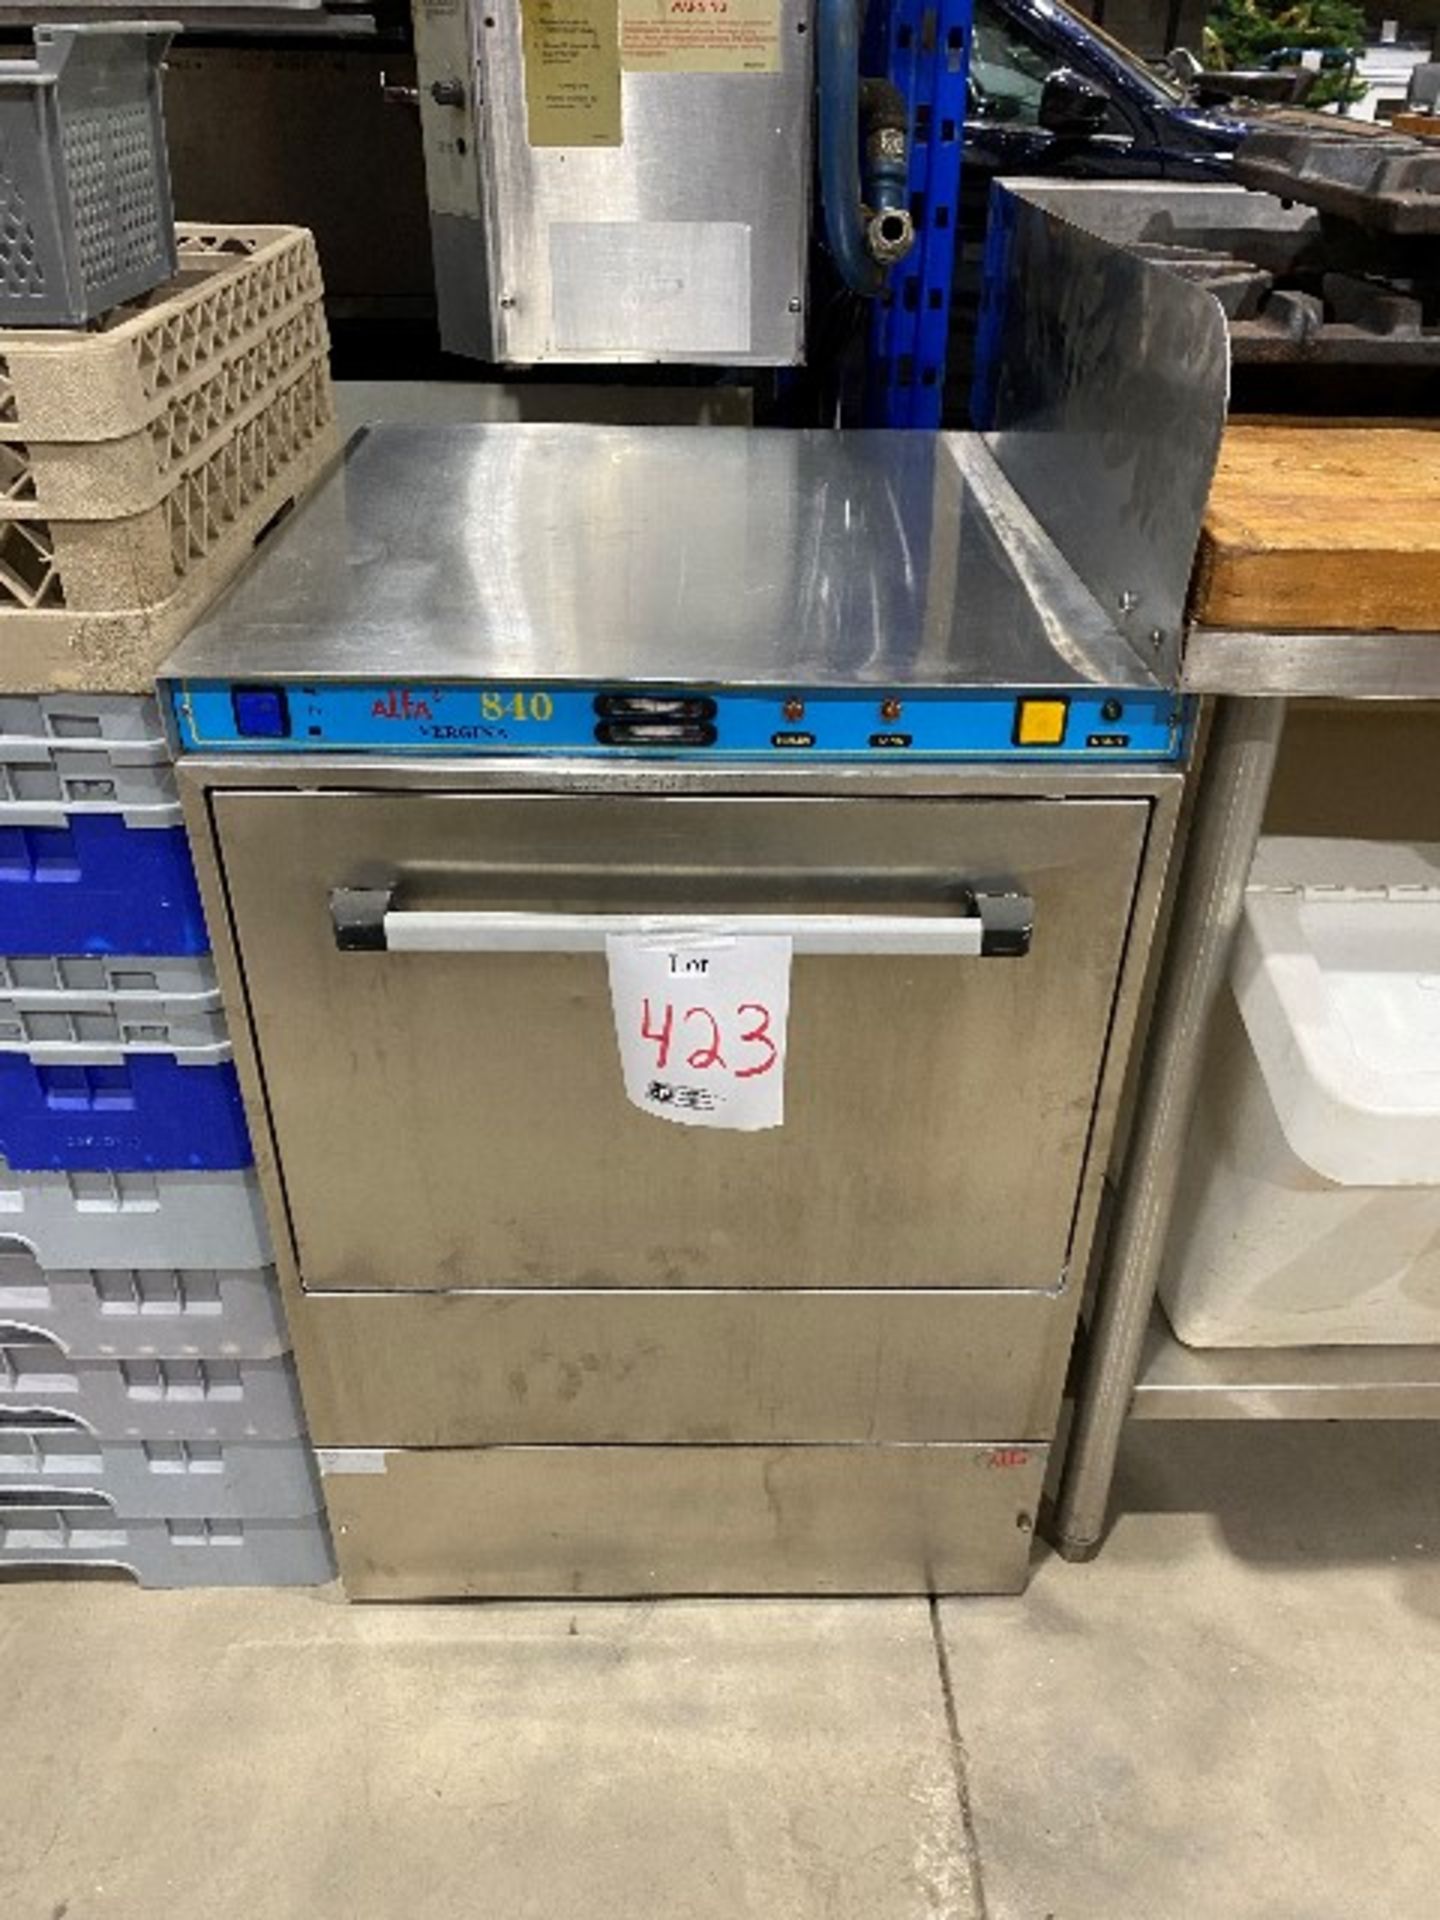 Alfa 840 High temperature dishwasher